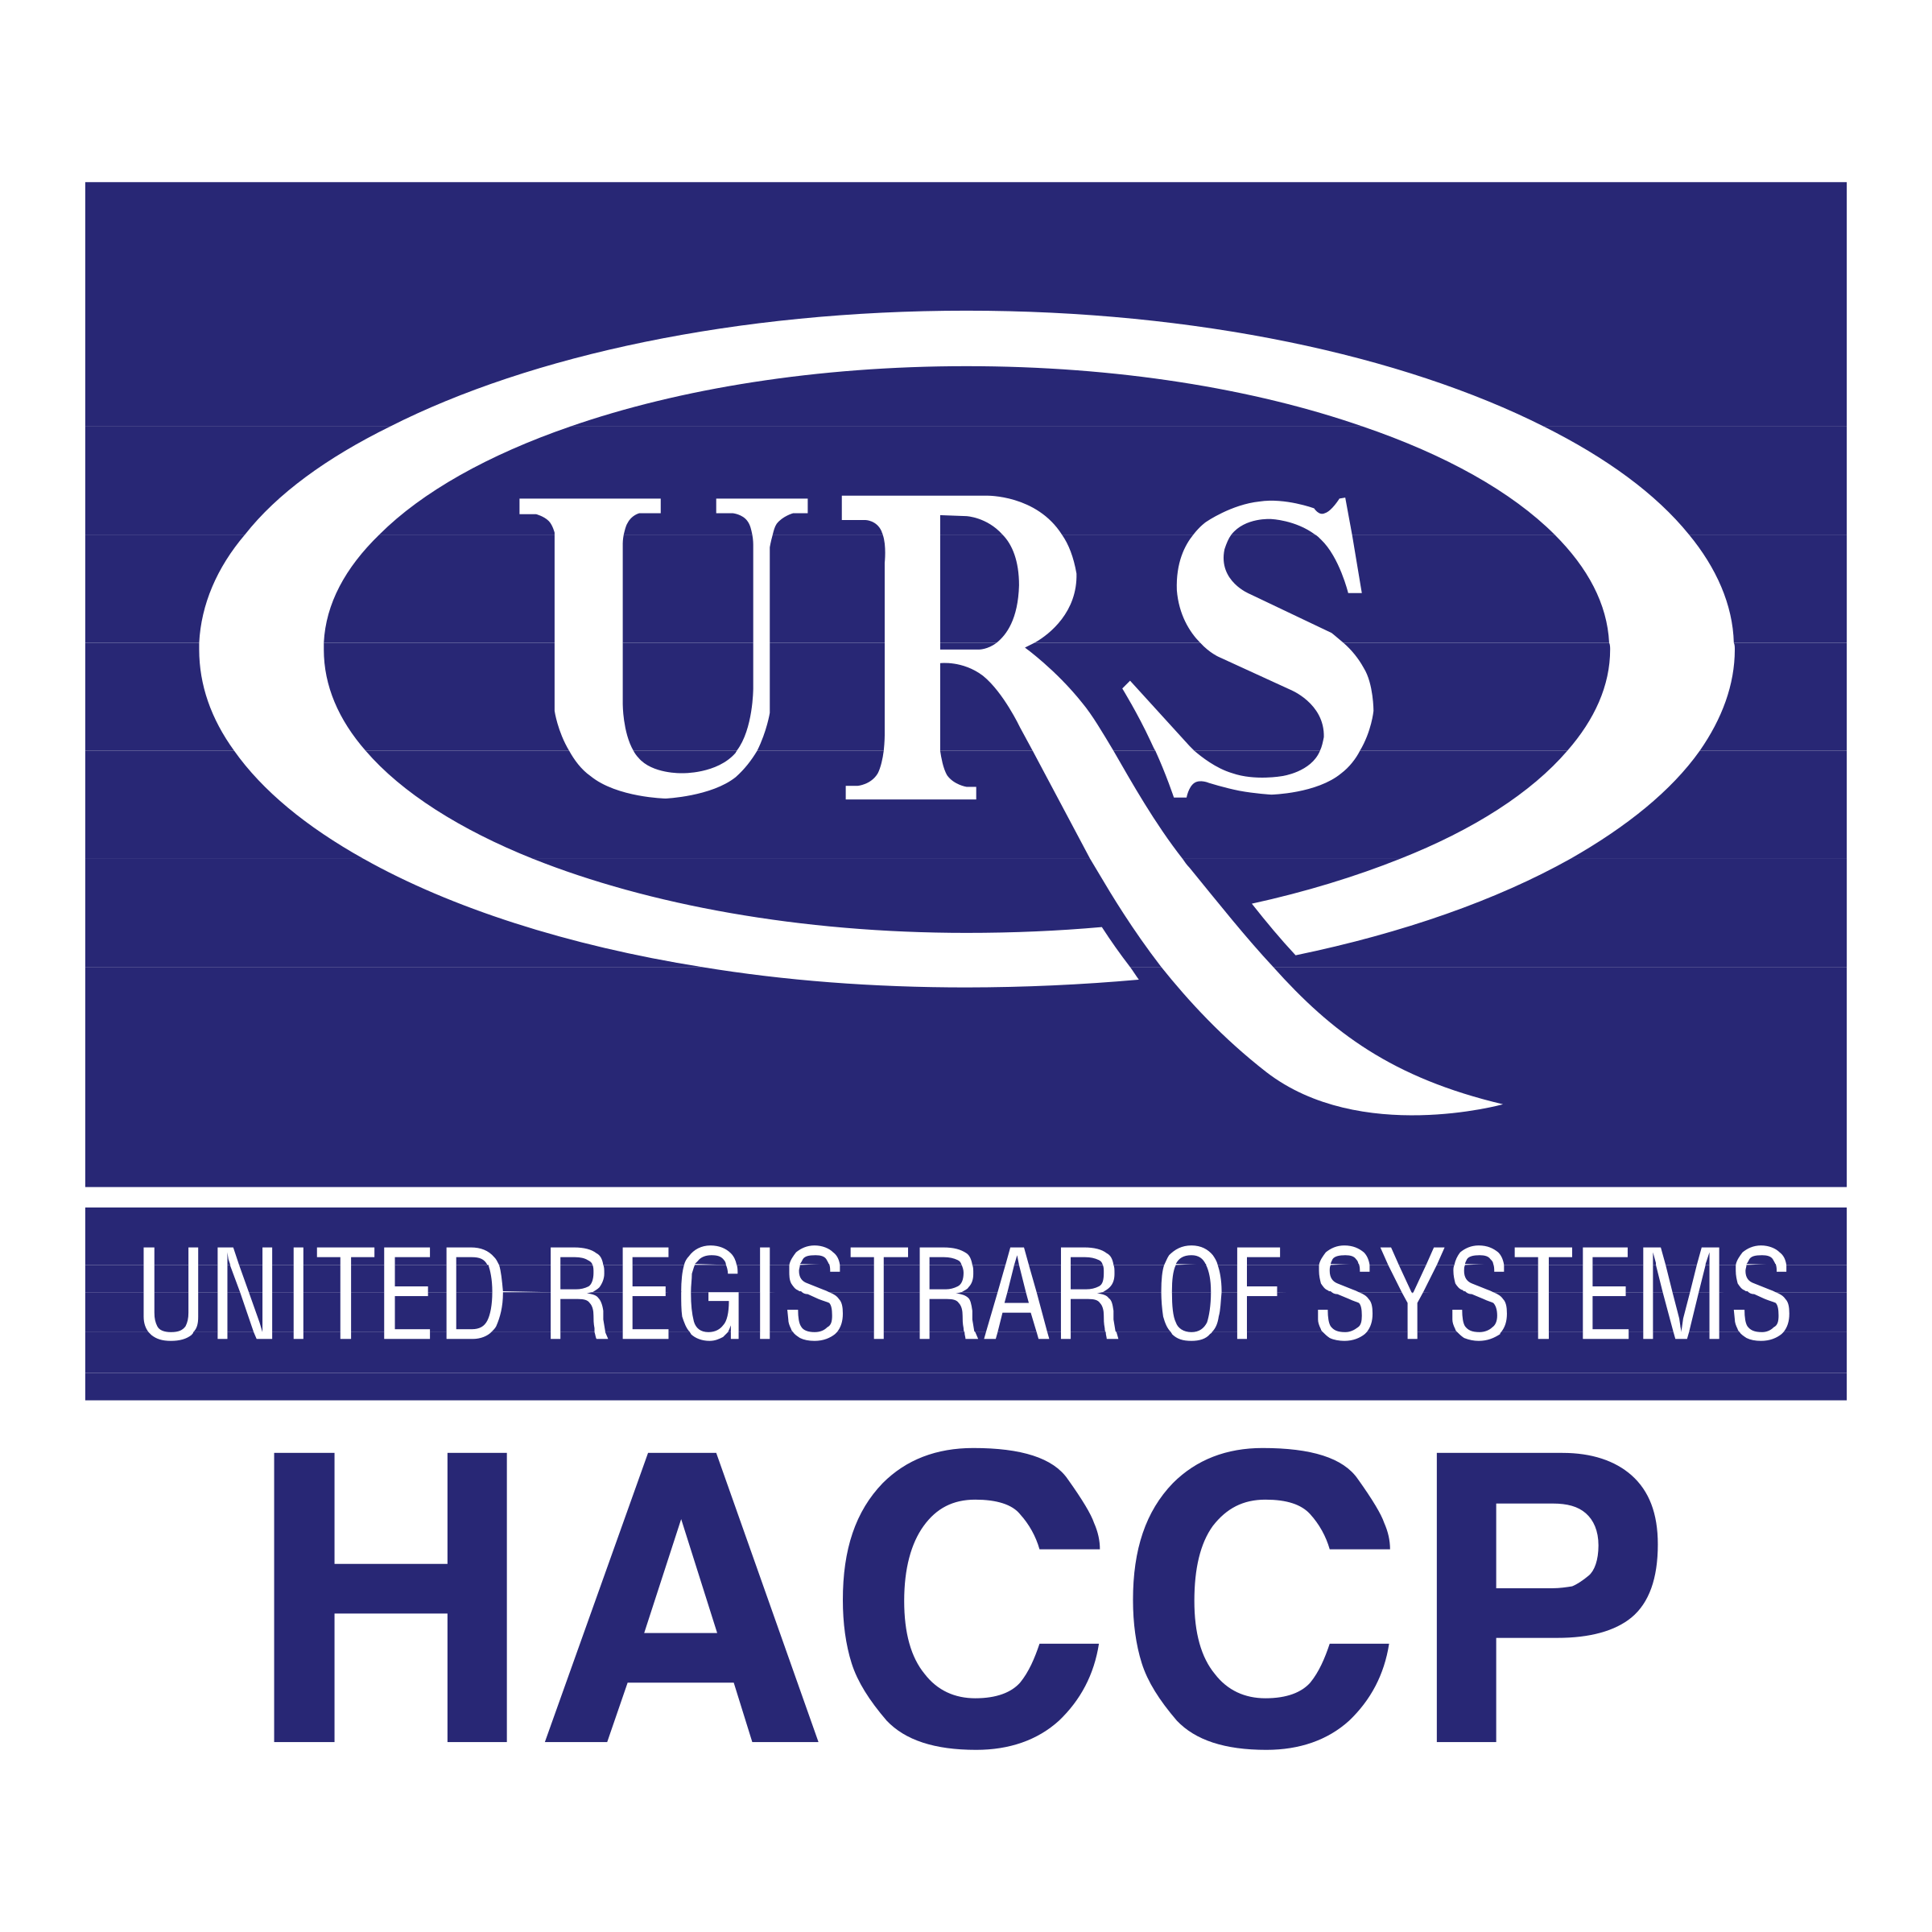 HACCP Logo - URS HACCP Logo PNG Transparent & SVG Vector - Freebie Supply